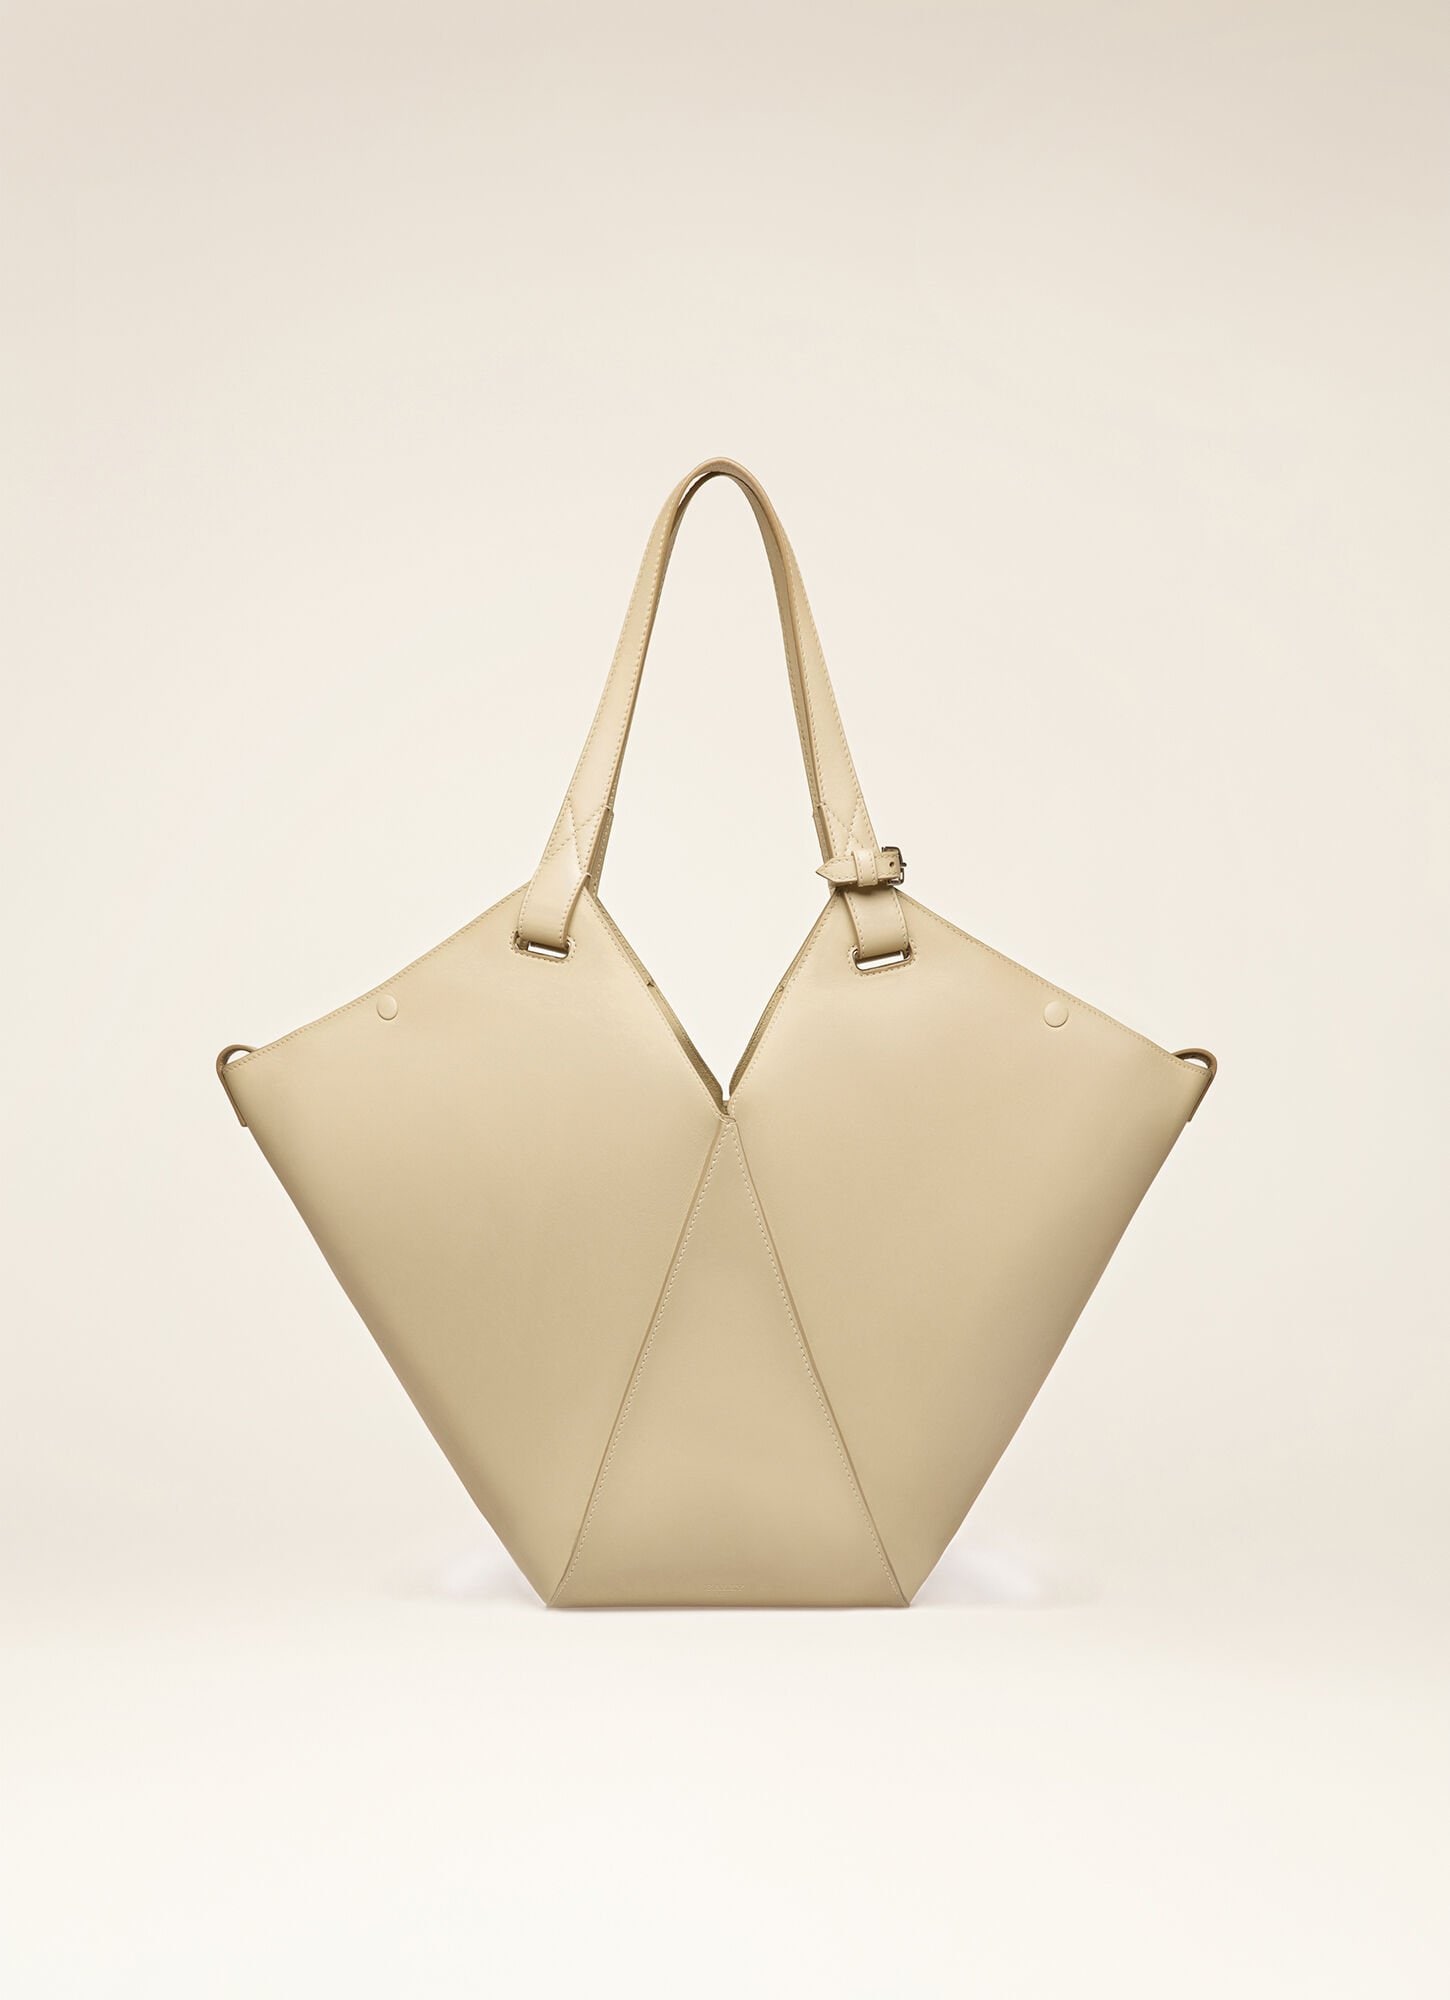 Bally Authentic Bally Protective Dust Bag for Handbag Purse 19x16.5” White/Ivory 